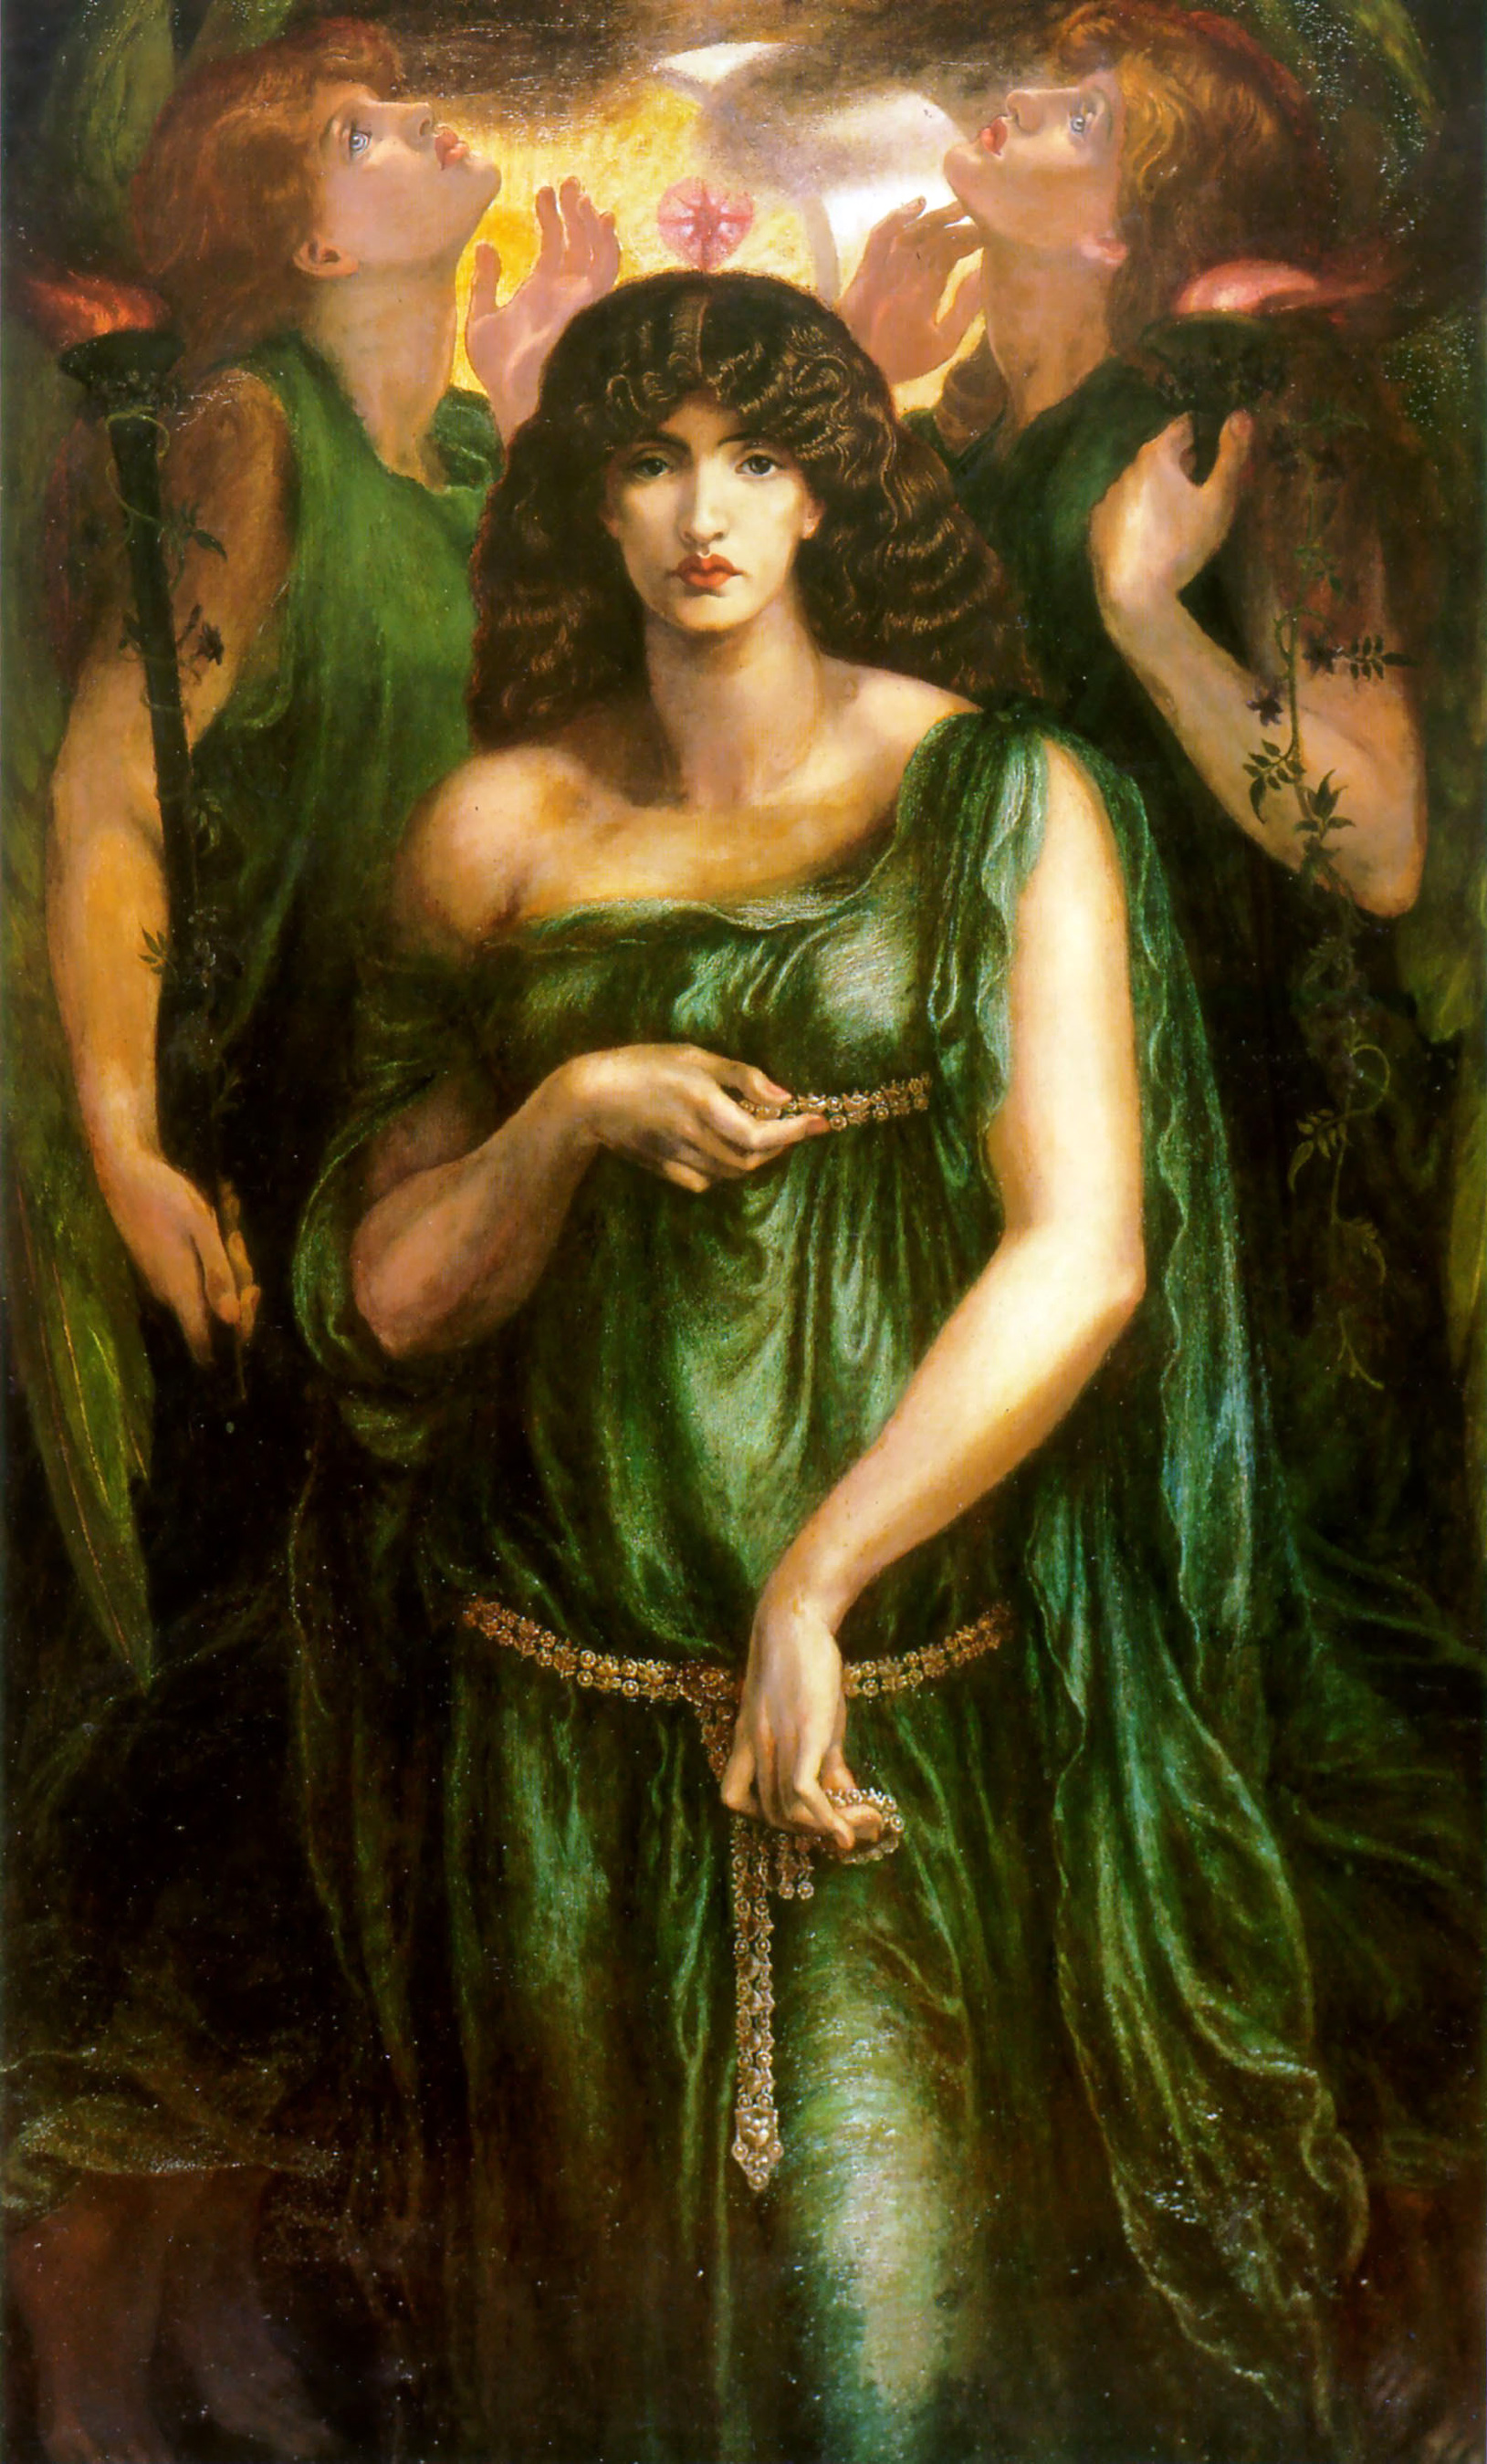 Astarte Syriaca by Dante Gabriel Rossetti - 1877 Manchester Art Gallery